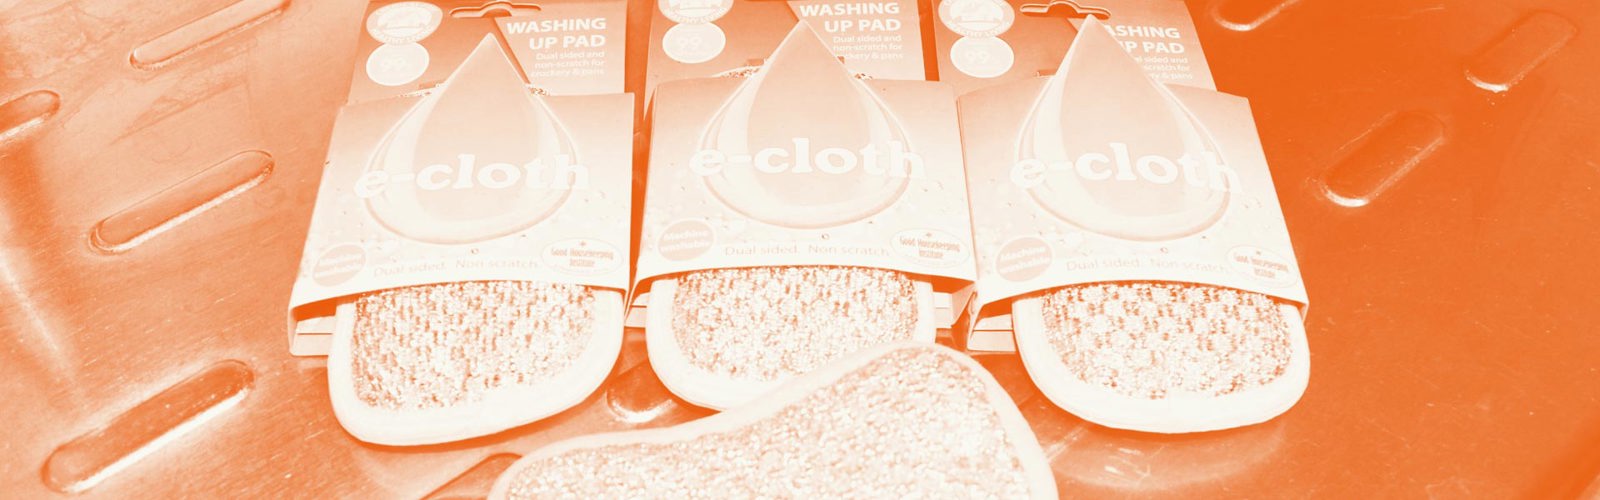 e-cloth washing up pads